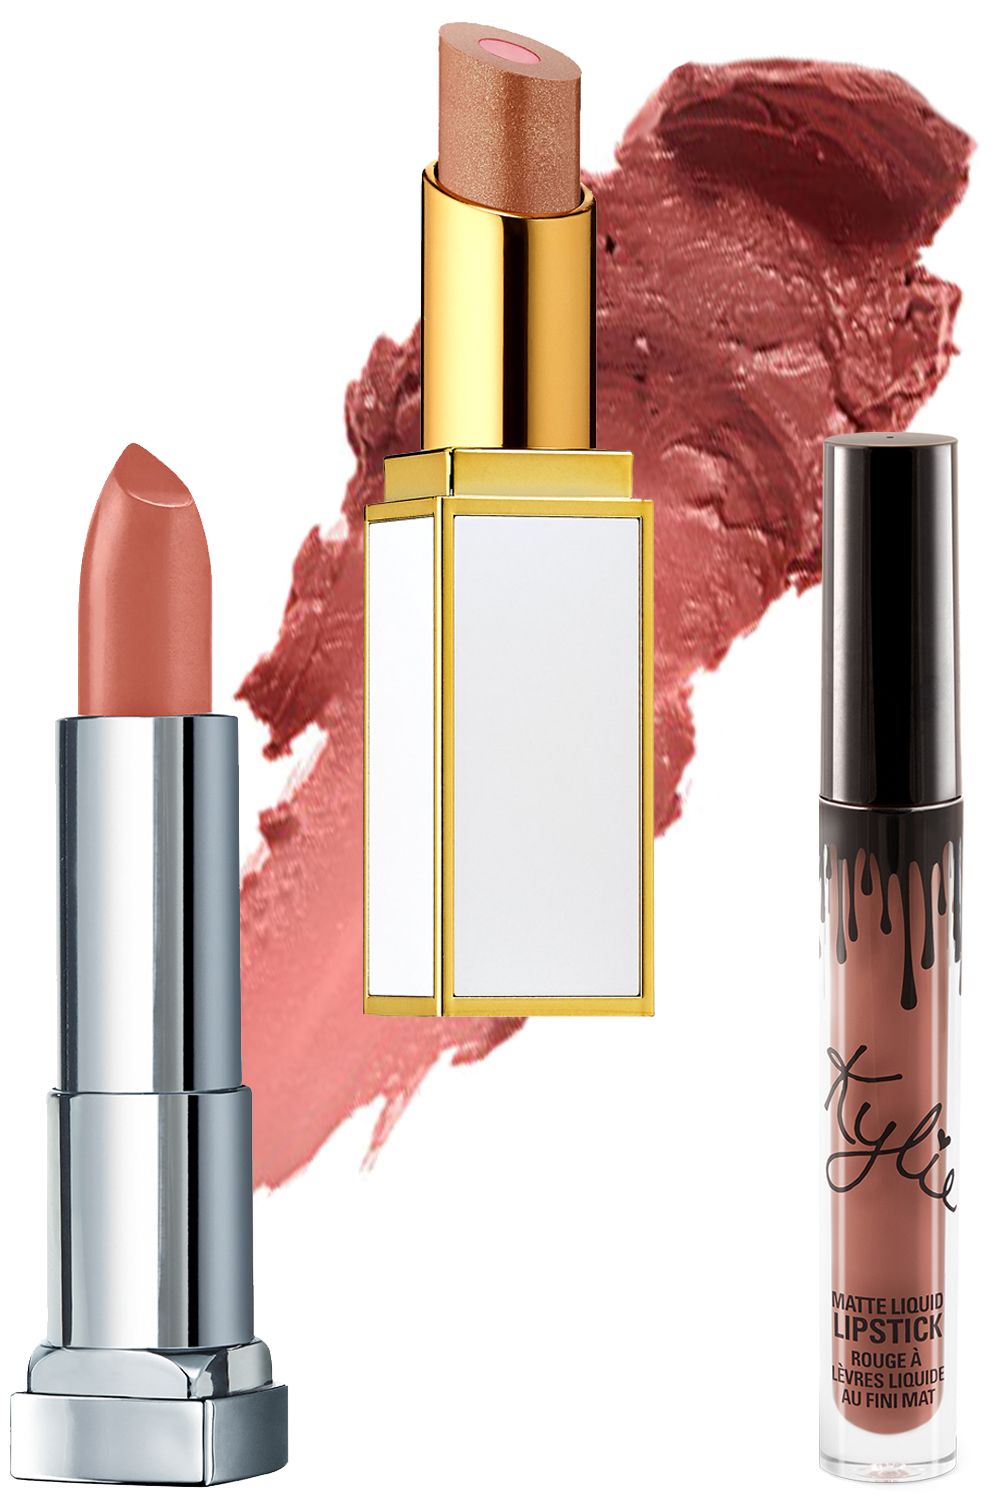 The Best Lipsticks for Summer - Best New Summer Lip Colors 2017